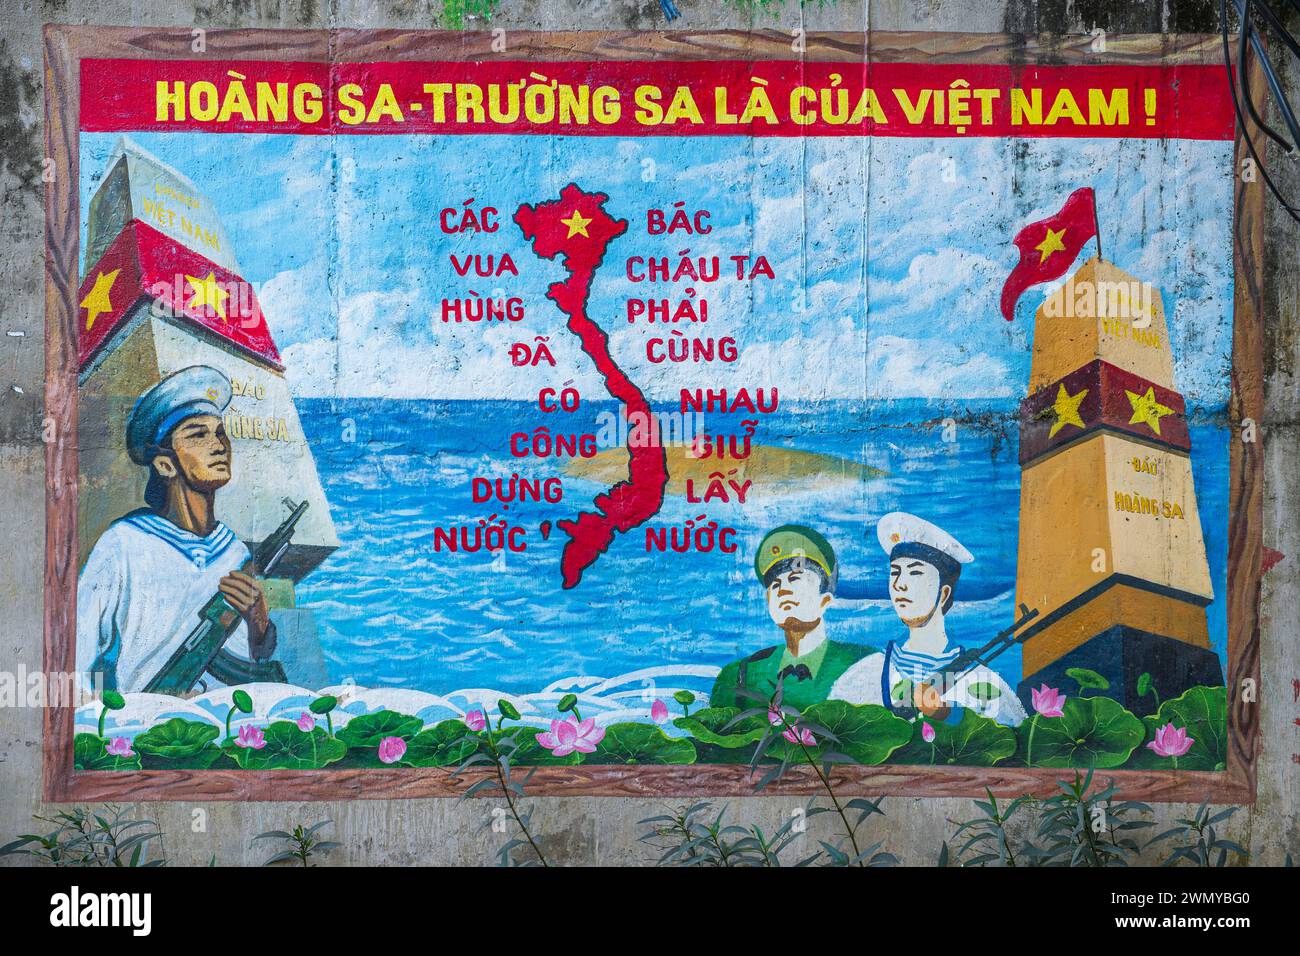 Vietnam, Mekong Delta, Cai Rang district, painting claiming that the Hoang Sa and Truong Sa islands (Pattle and Spratly Islands) belong to Vietnam Stock Photo